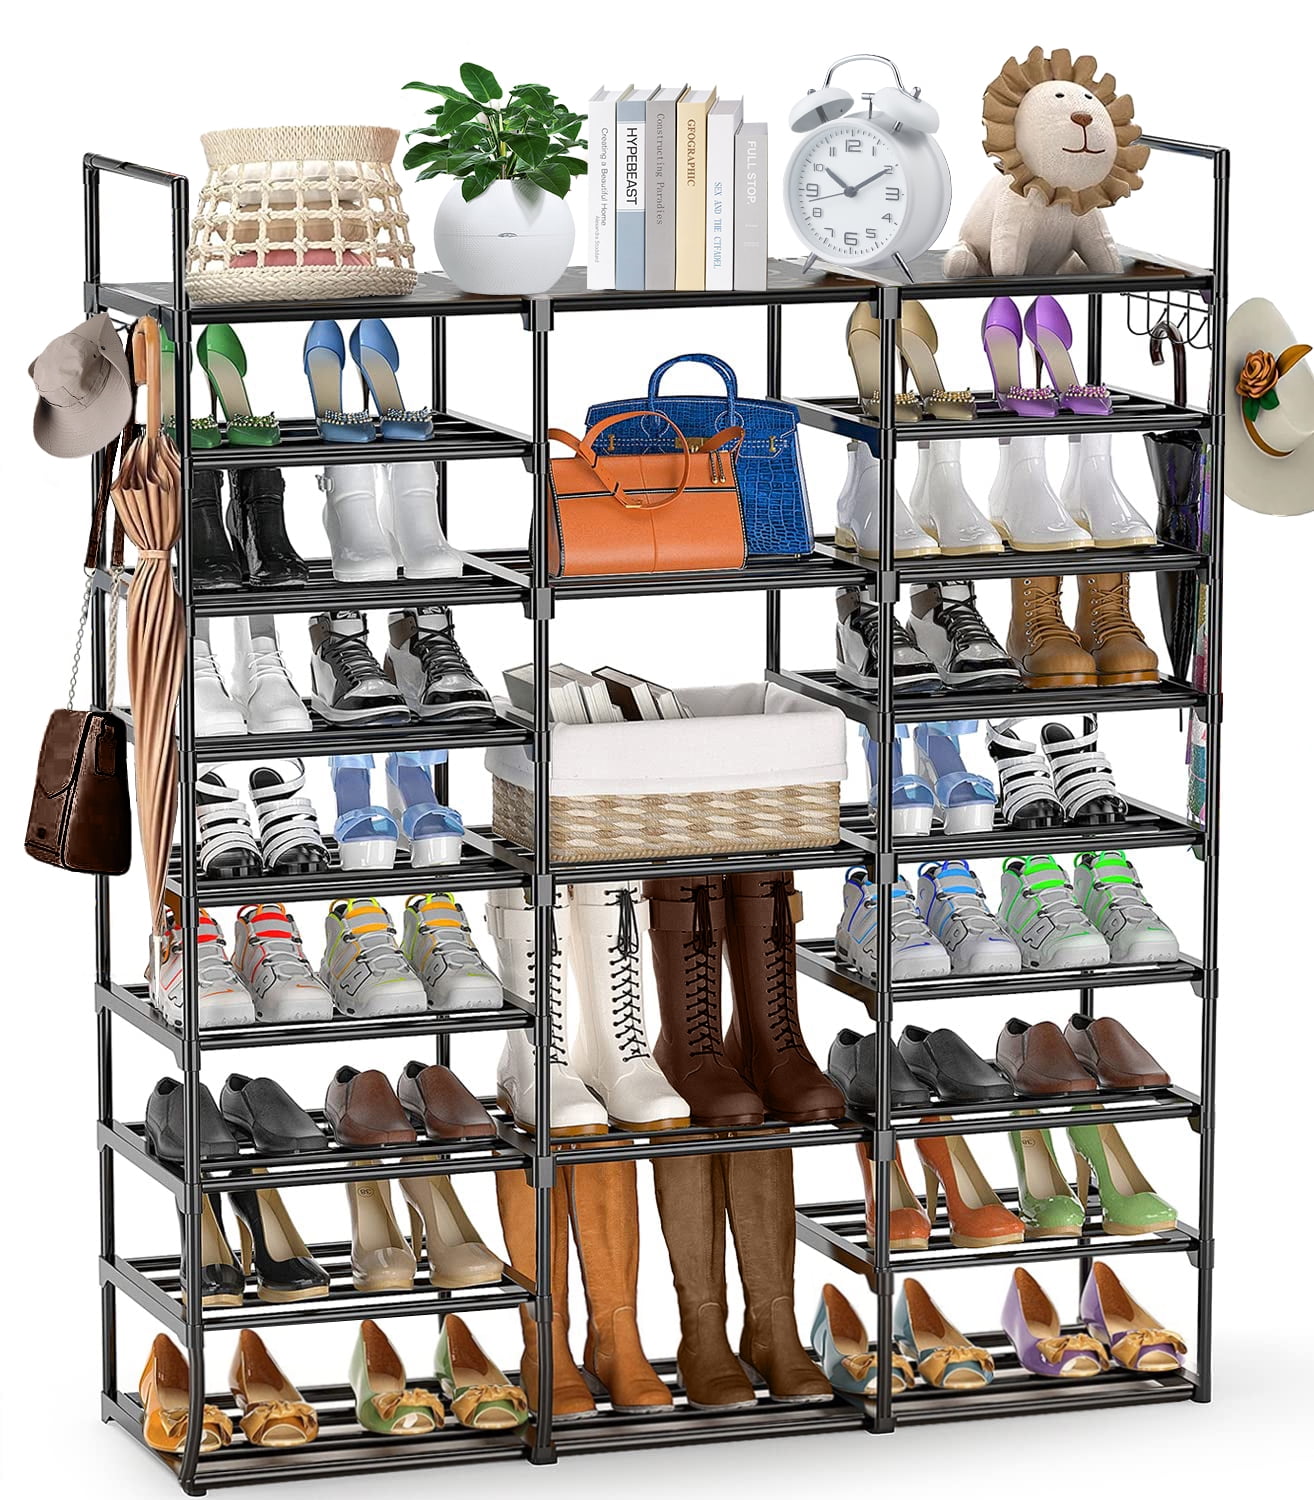 HONEIER 5/6 Tier Shoe Rack, Sturdy Metal Shoe Storage Shelf for 18